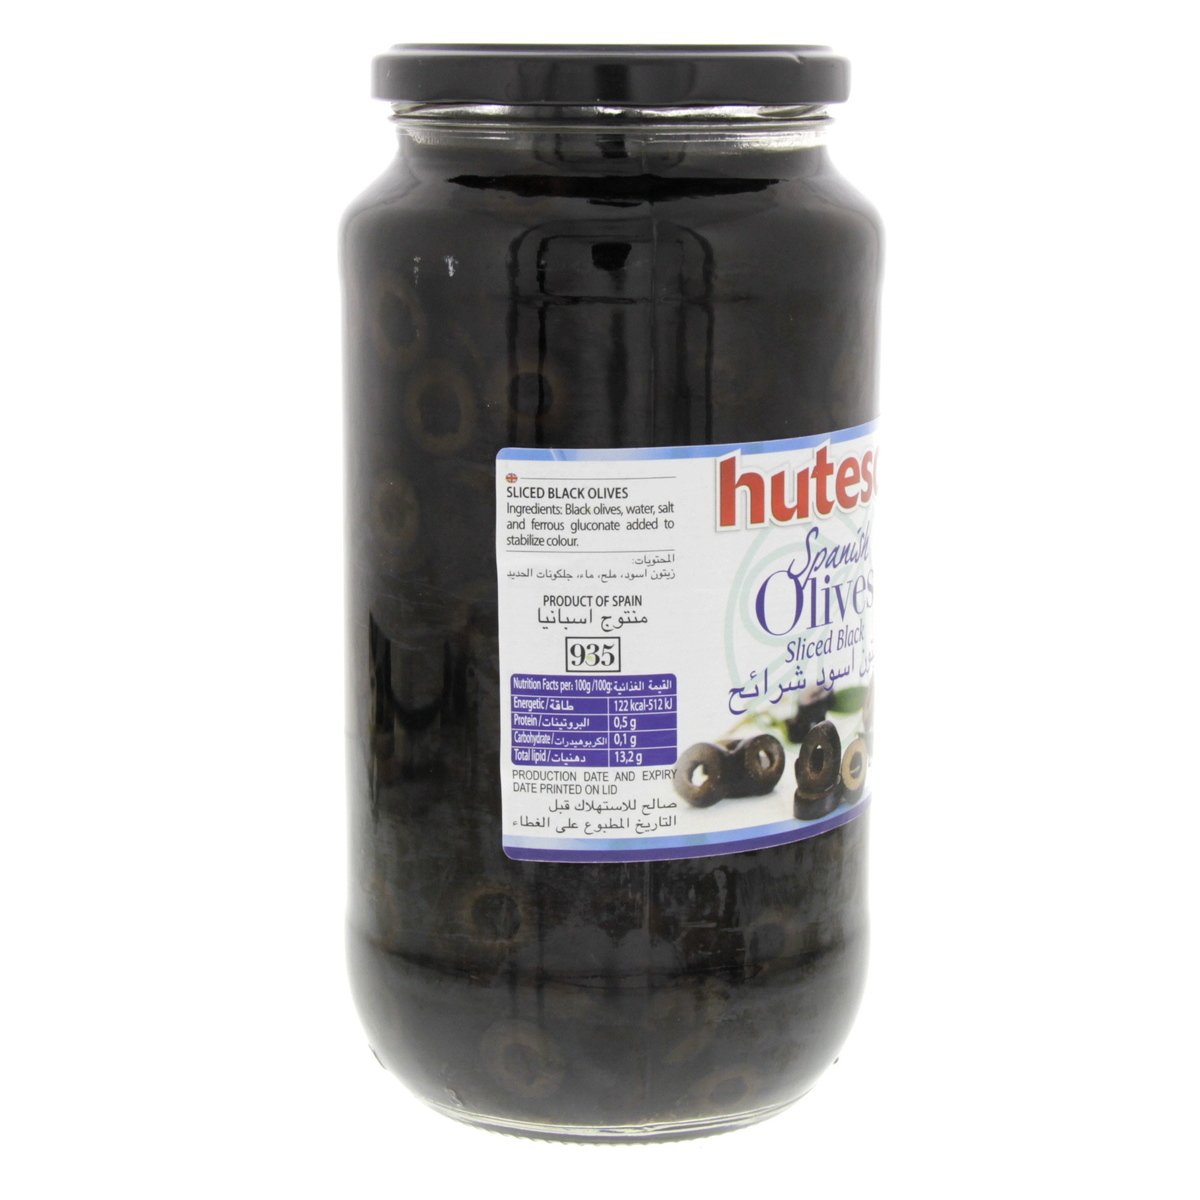 Hutesa Spanish Black Olives Sliced 450g